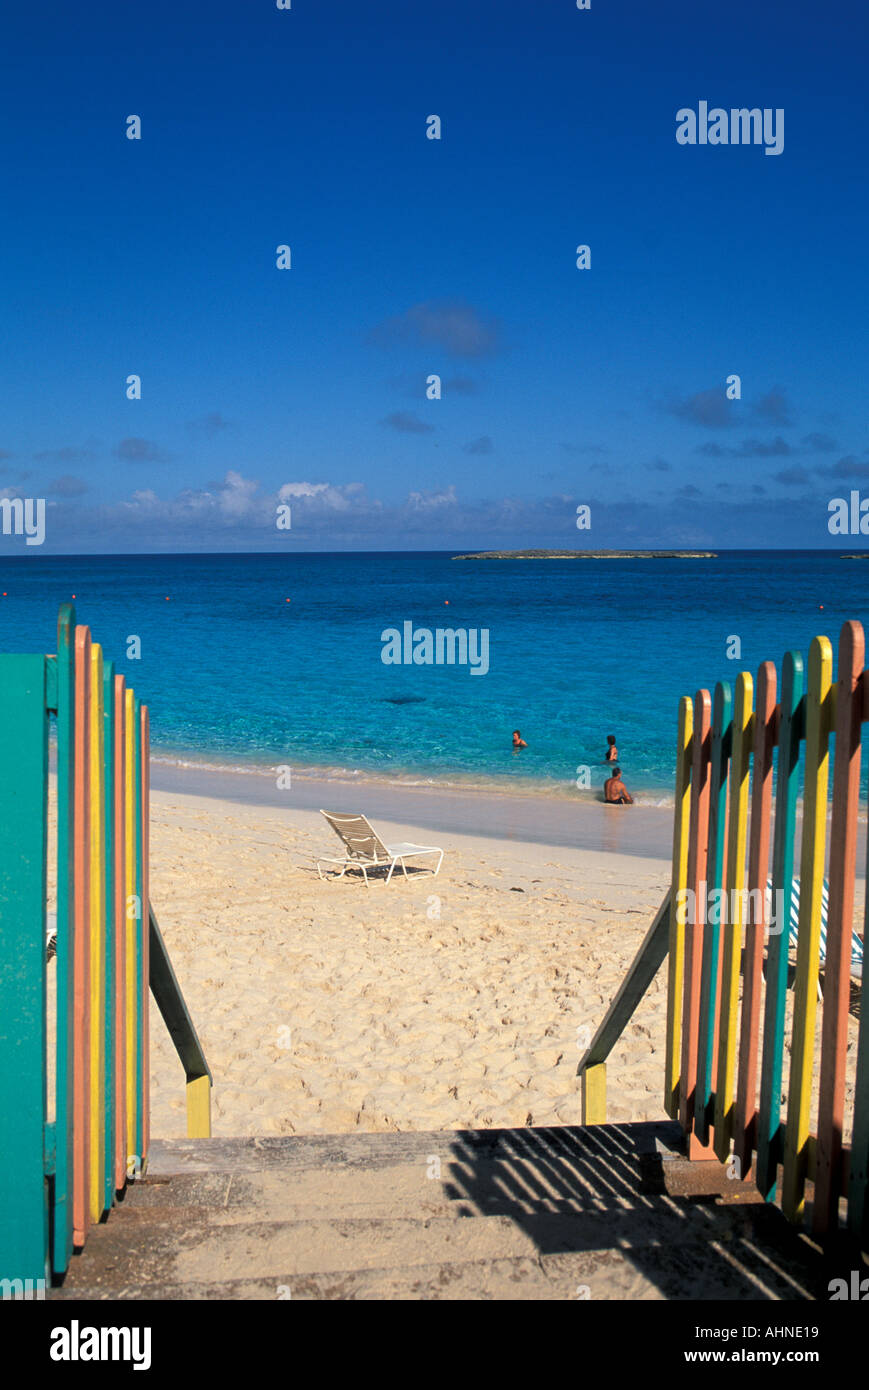 Bahamas Paradise Island Beach with colorful railings leading to the water at Atlantis Resort Stock Photo